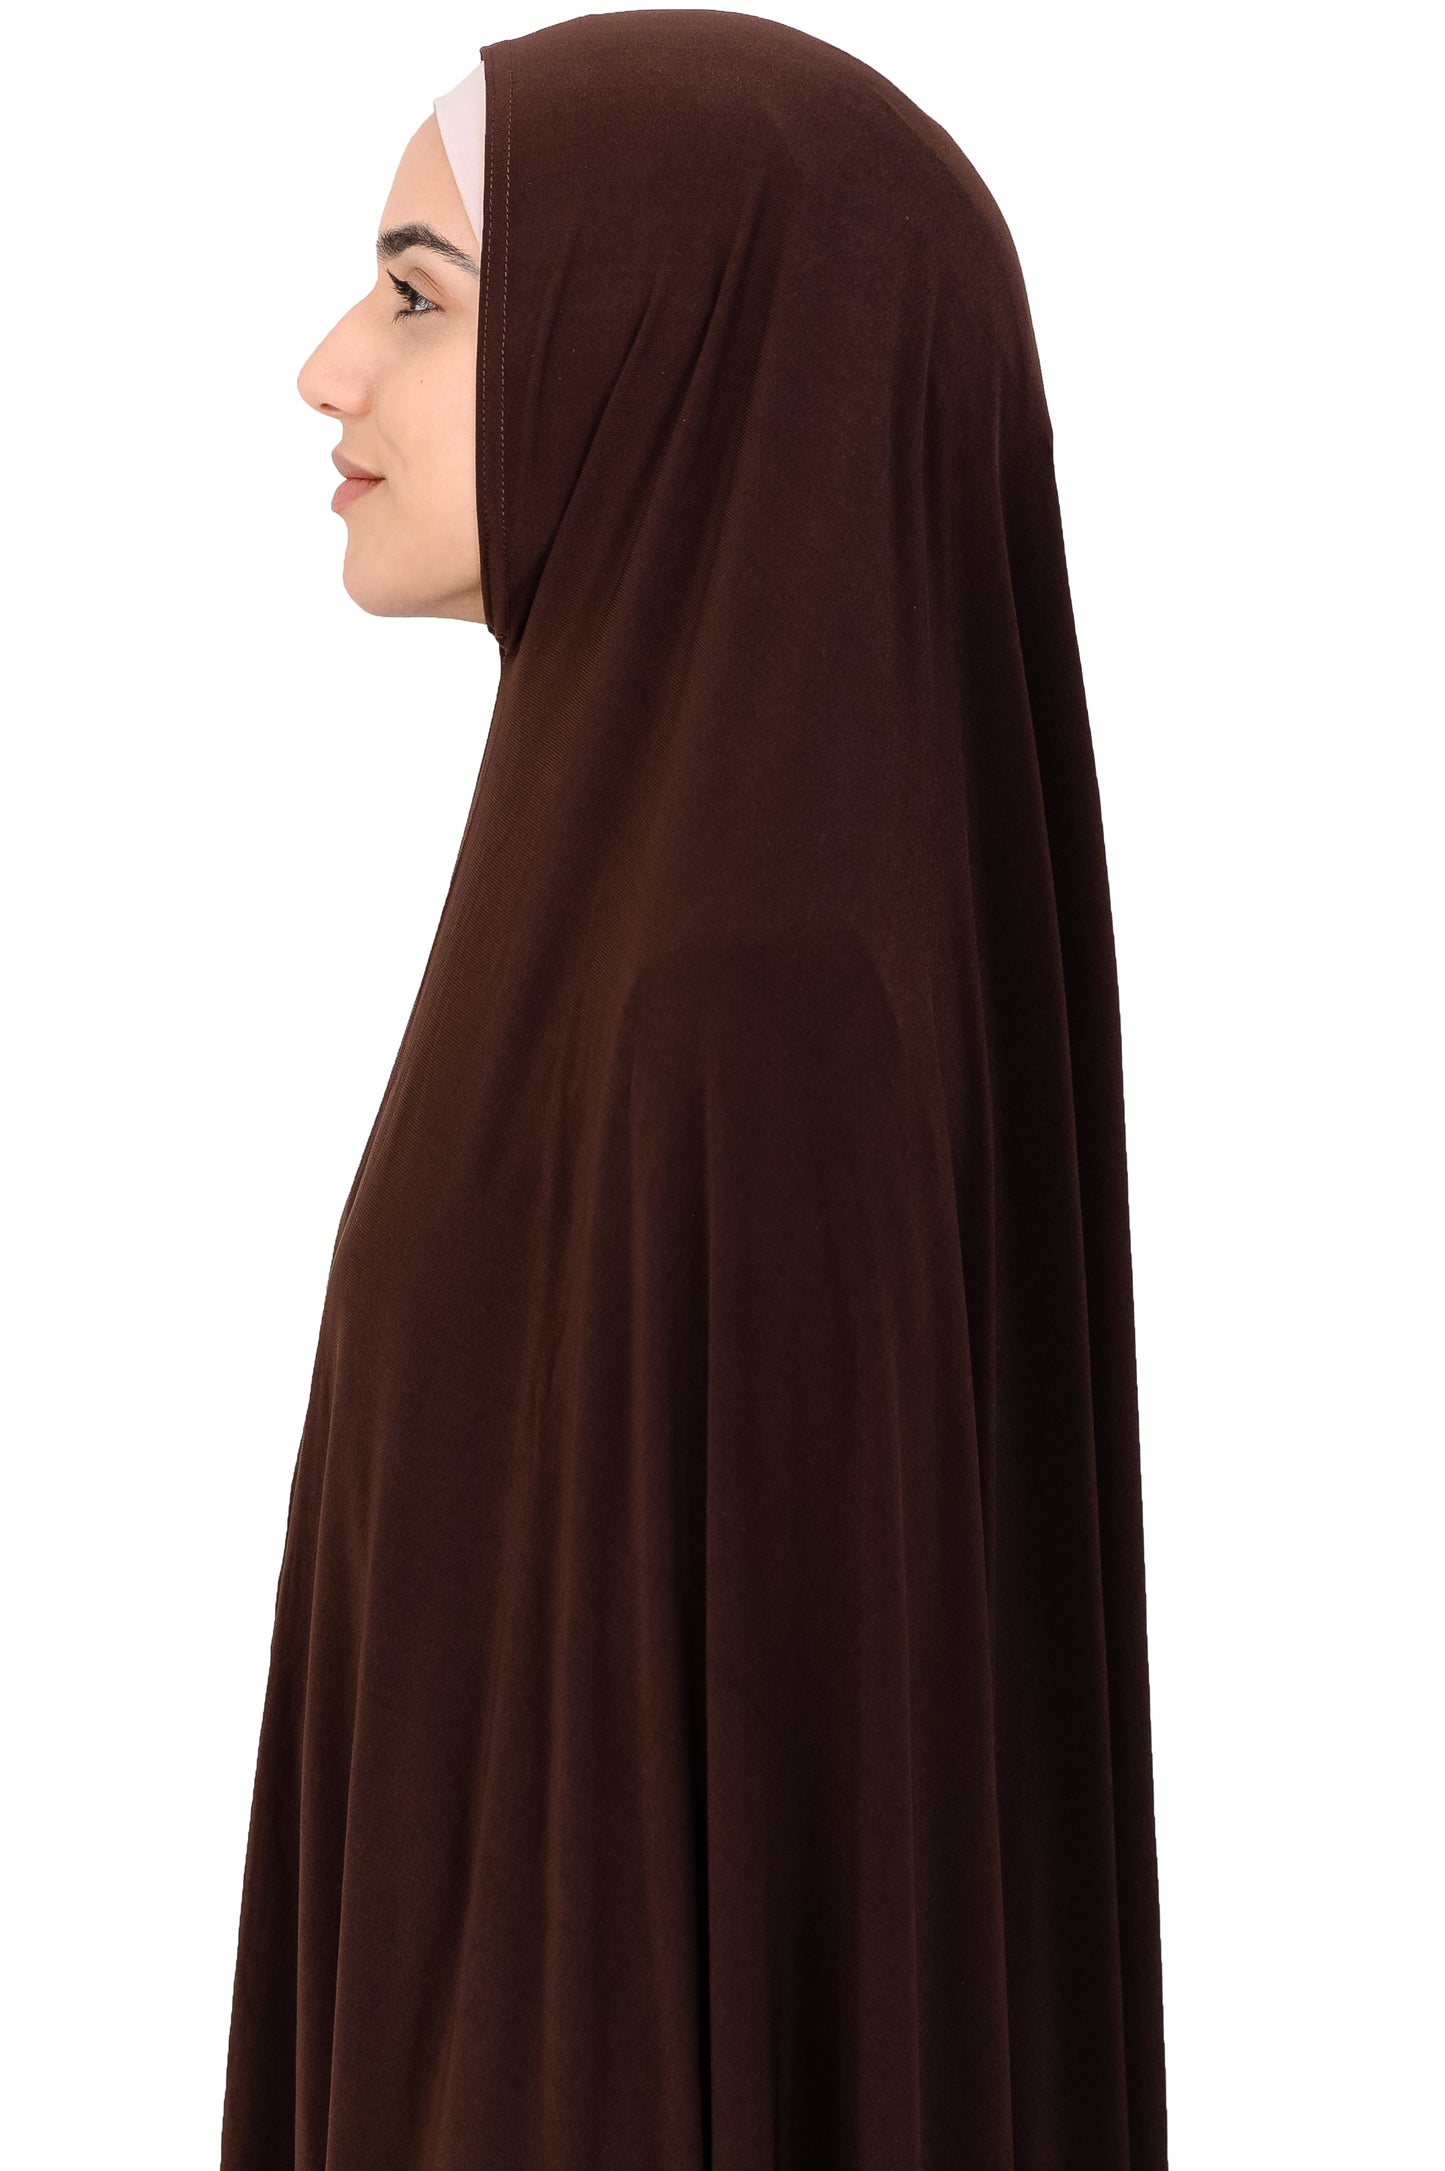 Xlong Standard Jelbab in Dark Brown - Behind The Veil